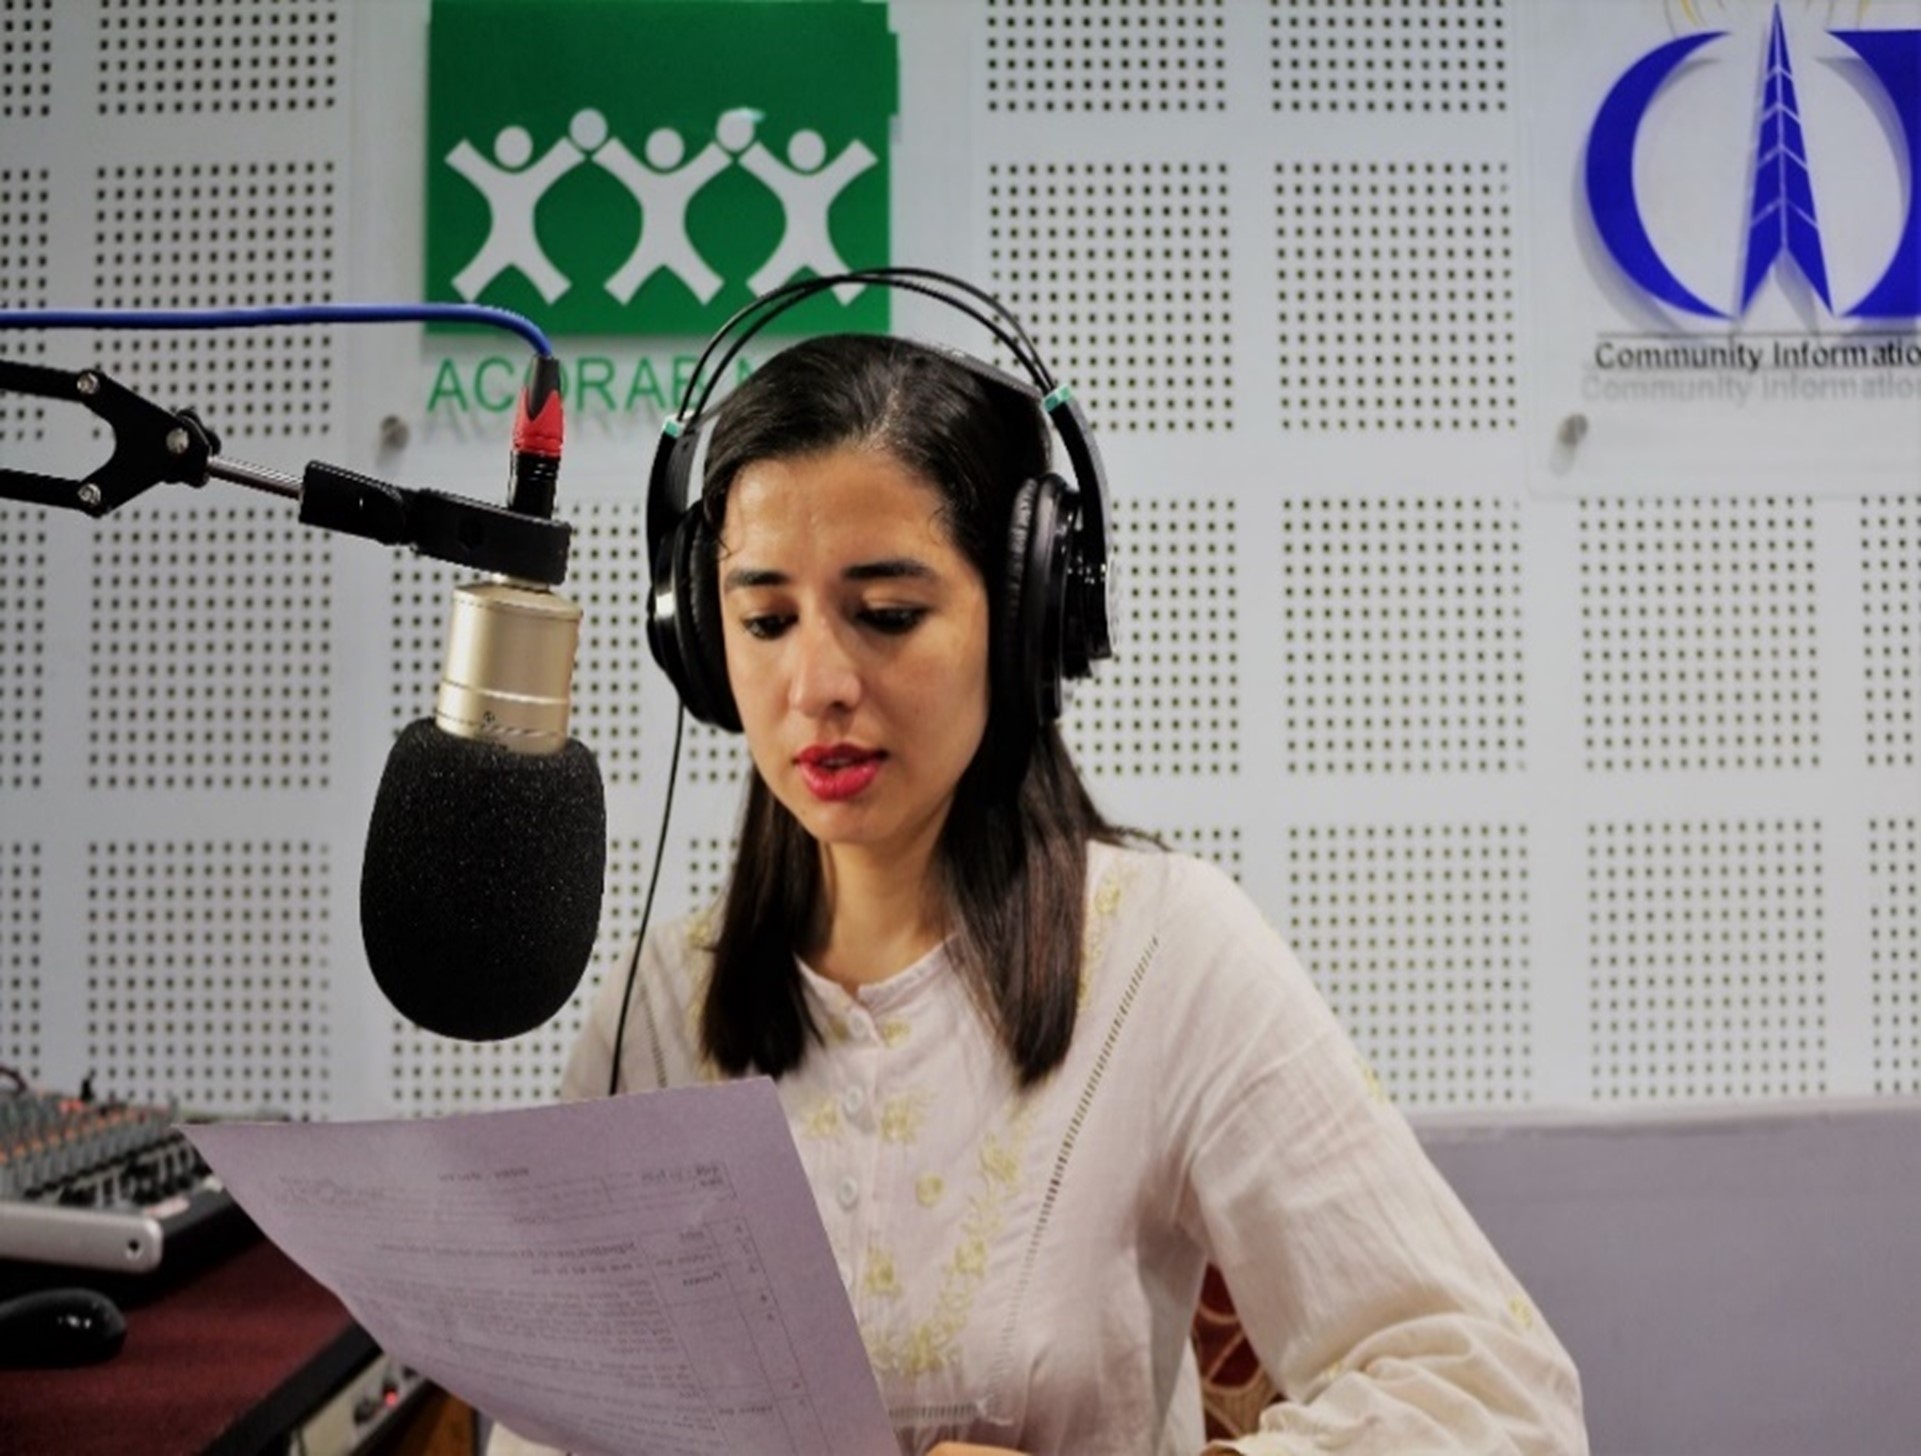 Women providing early warning messages via radio